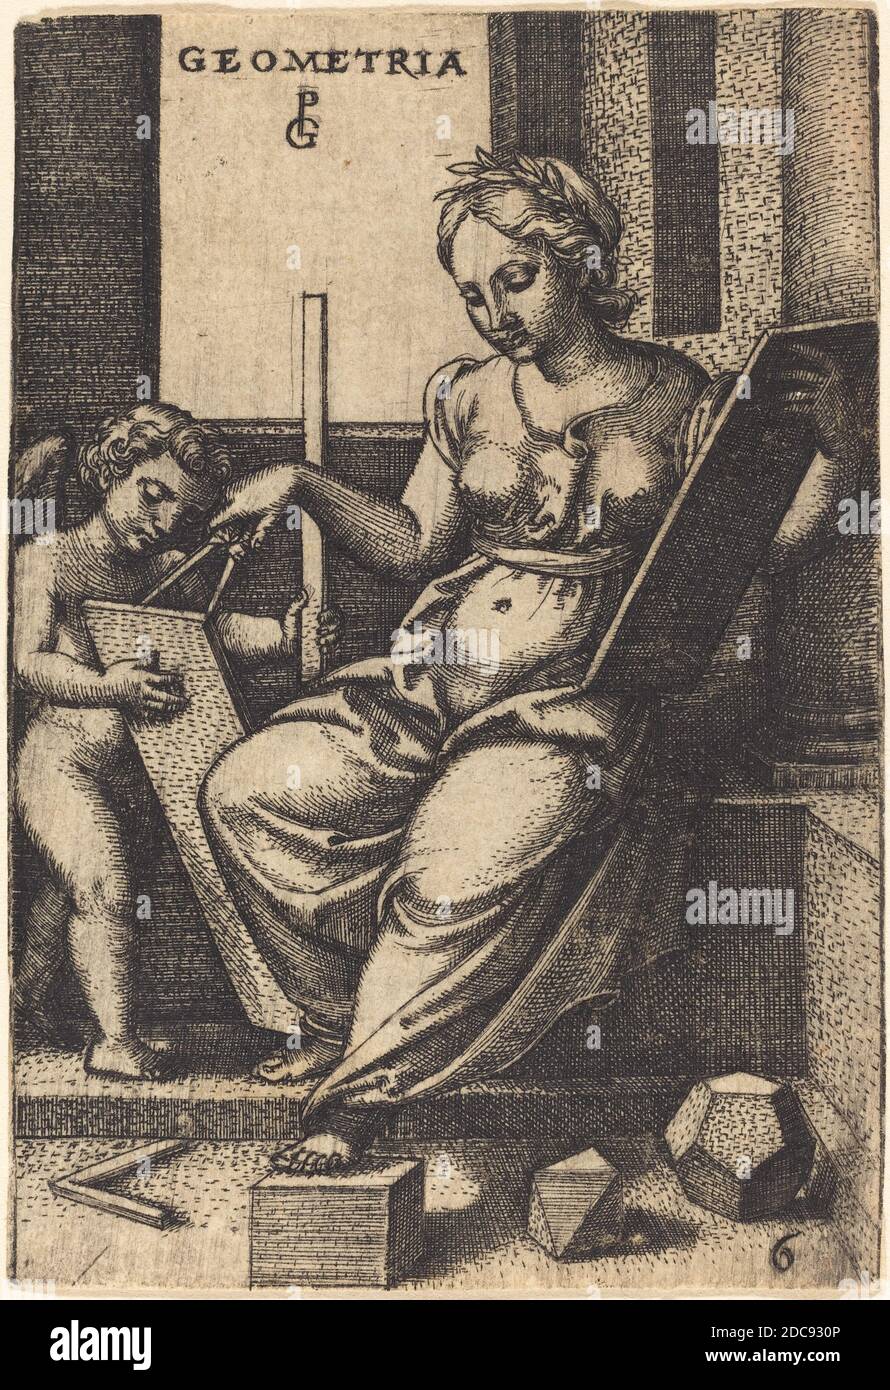 Georg Pencz, (artist), German, c. 1500 - 1550, Geometry, The Seven Liberal Arts, (series), engraving Stock Photo